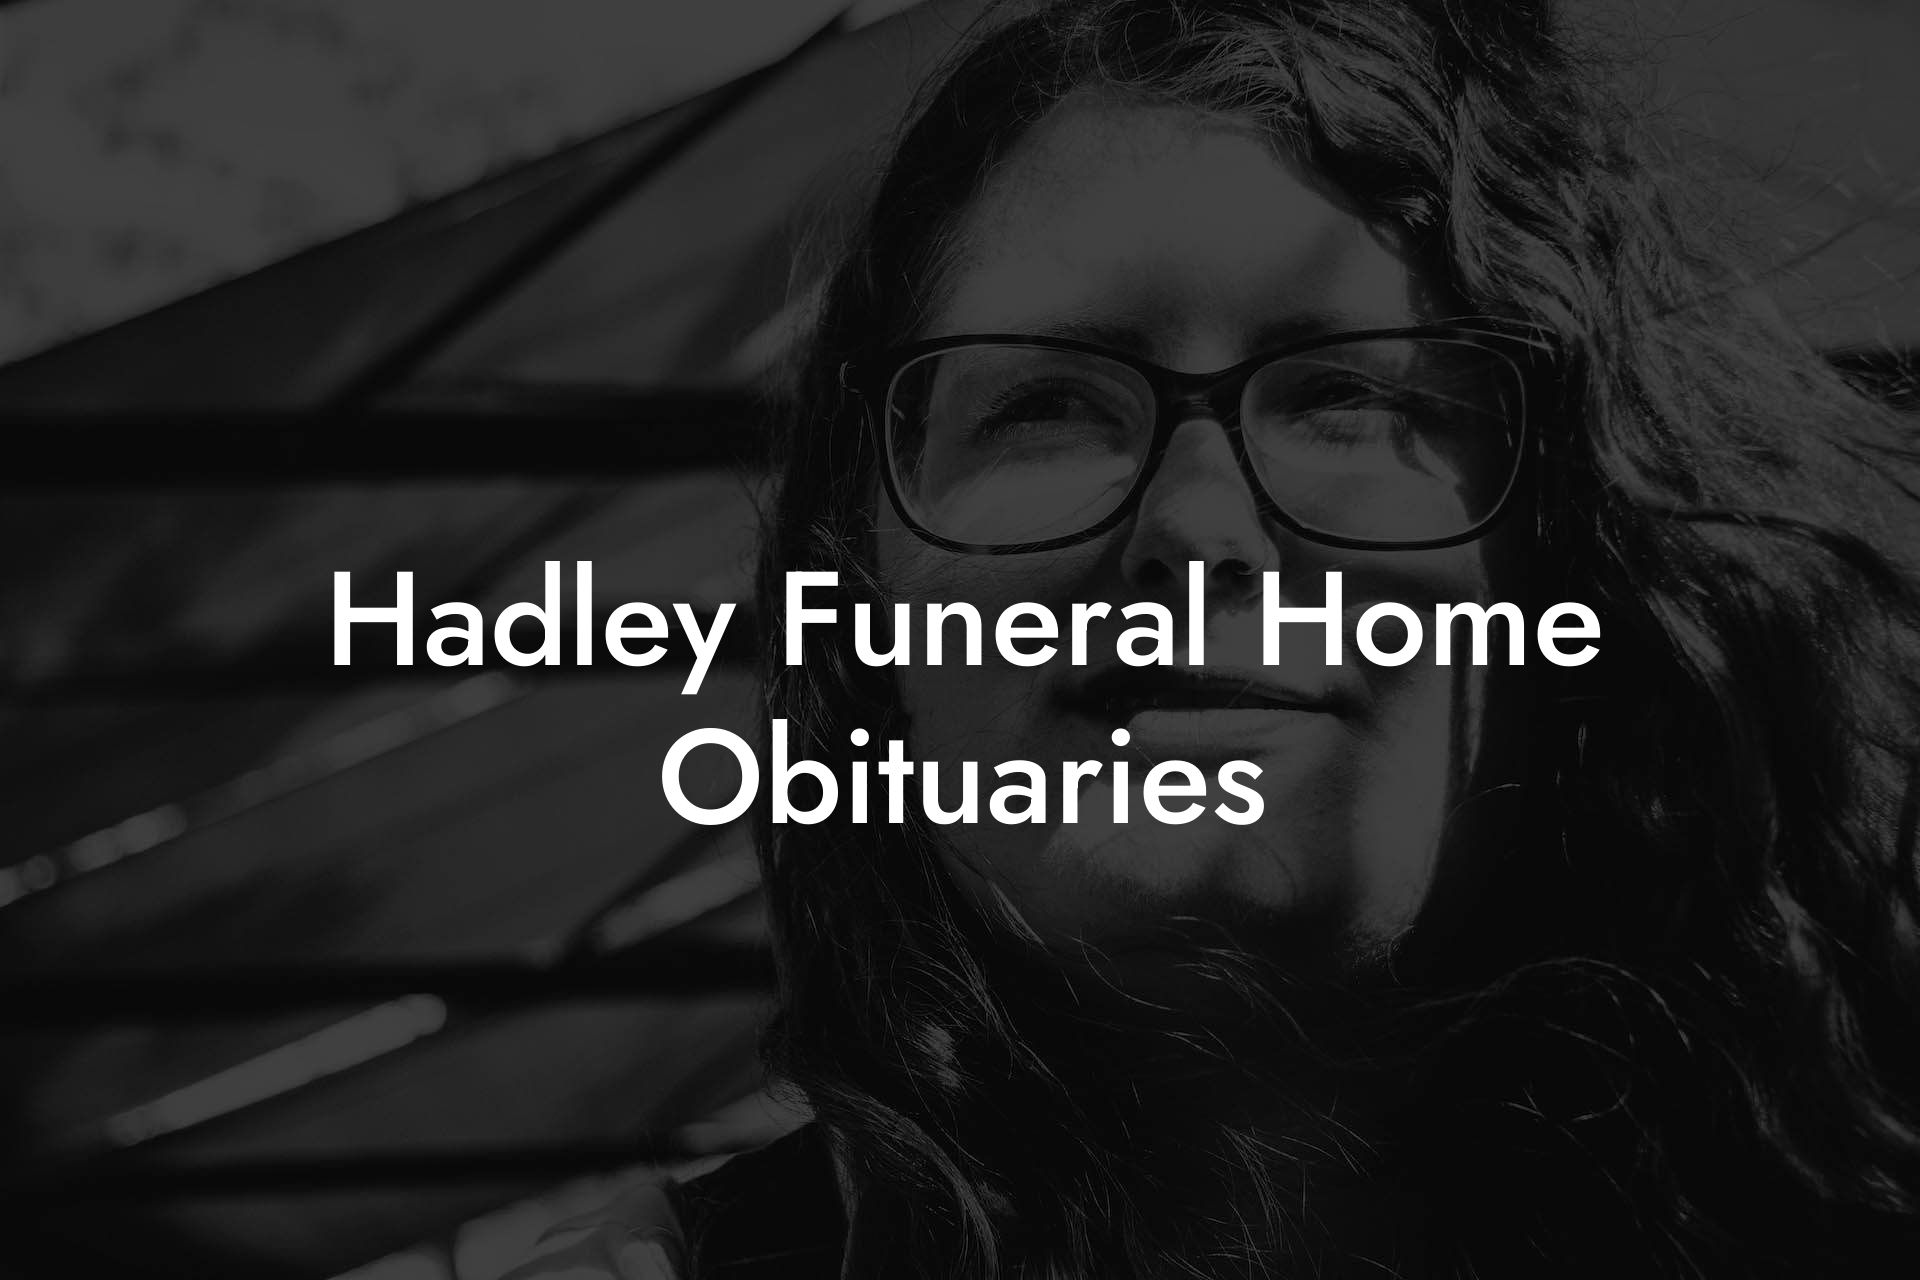 Hadley Funeral Home Obituaries